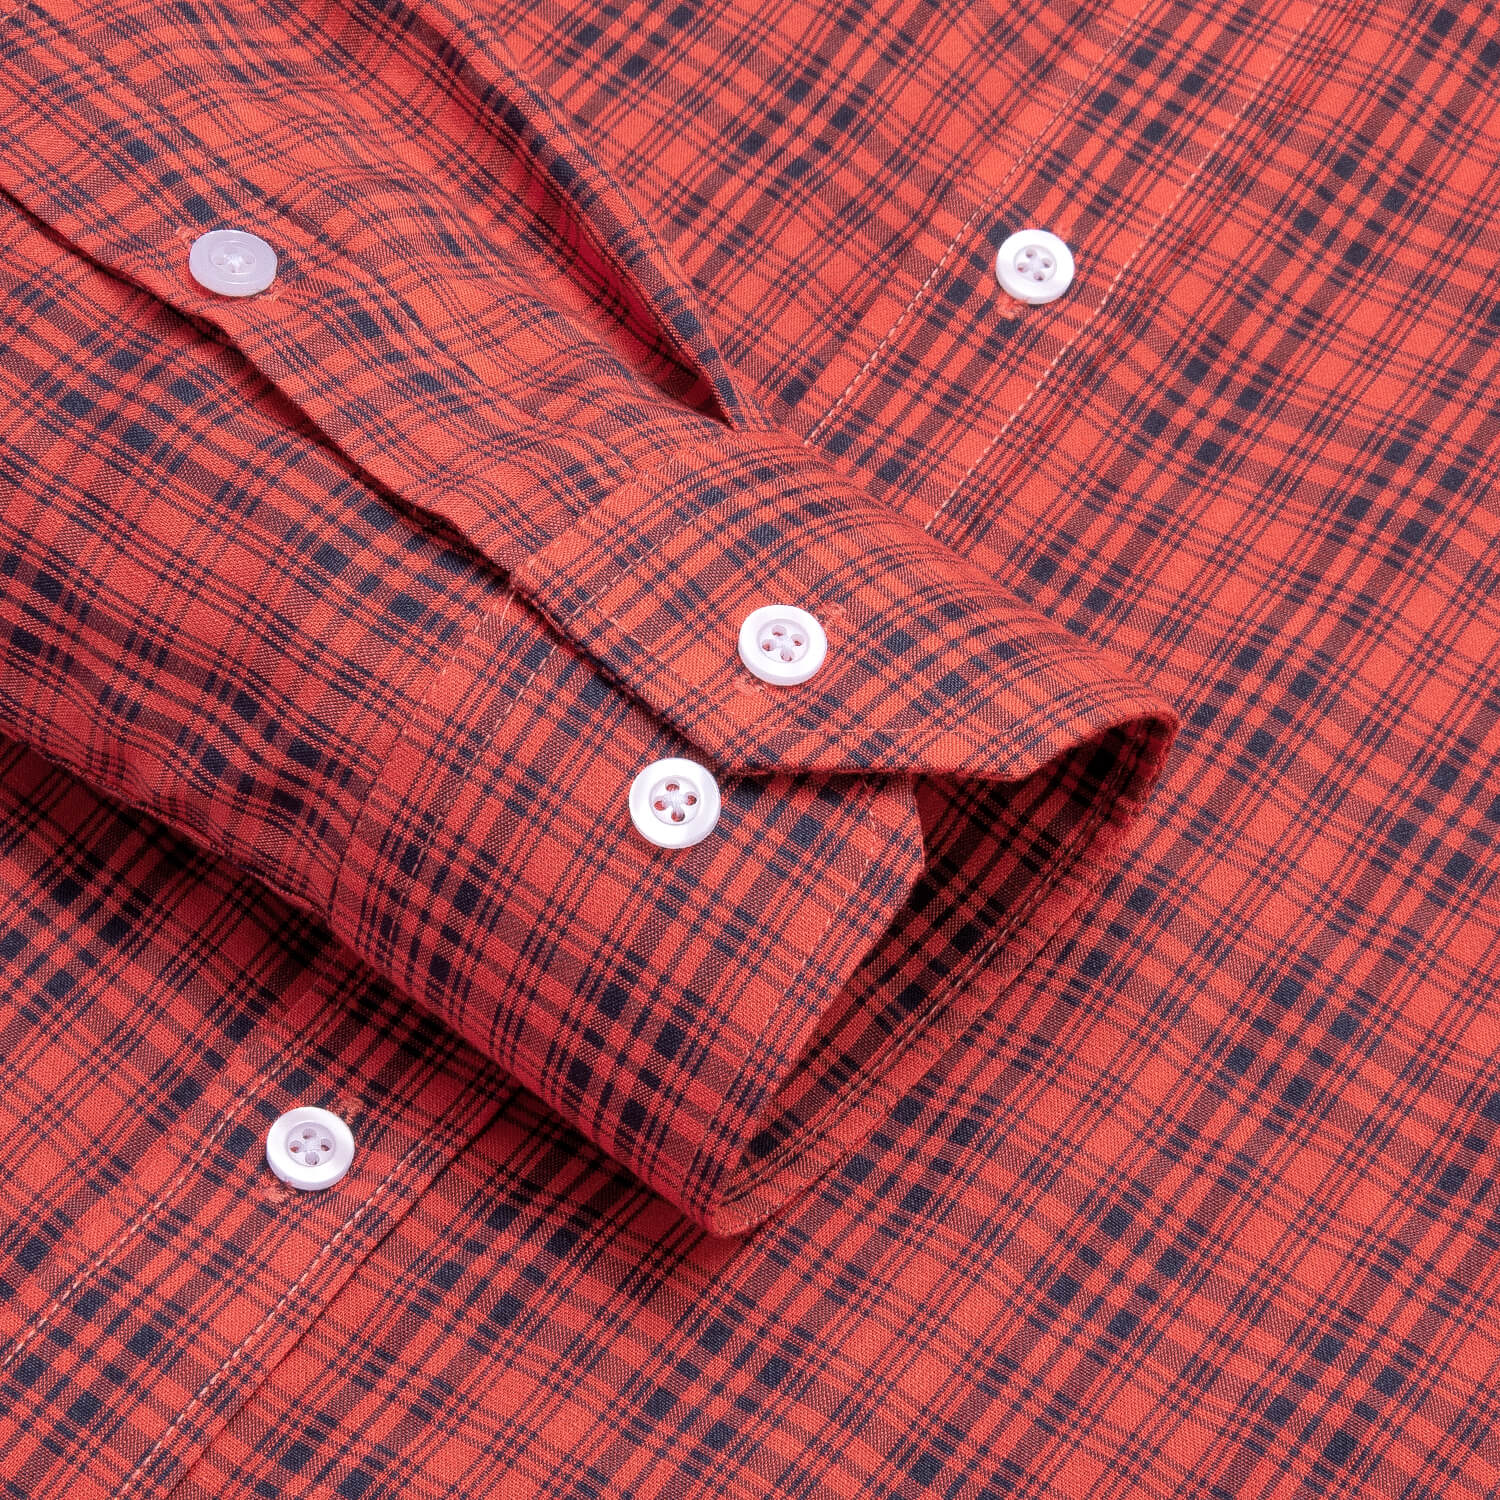 Hi-Tie Button Down Shirt Red Blue Plaid Silk Men's Shirt Classic